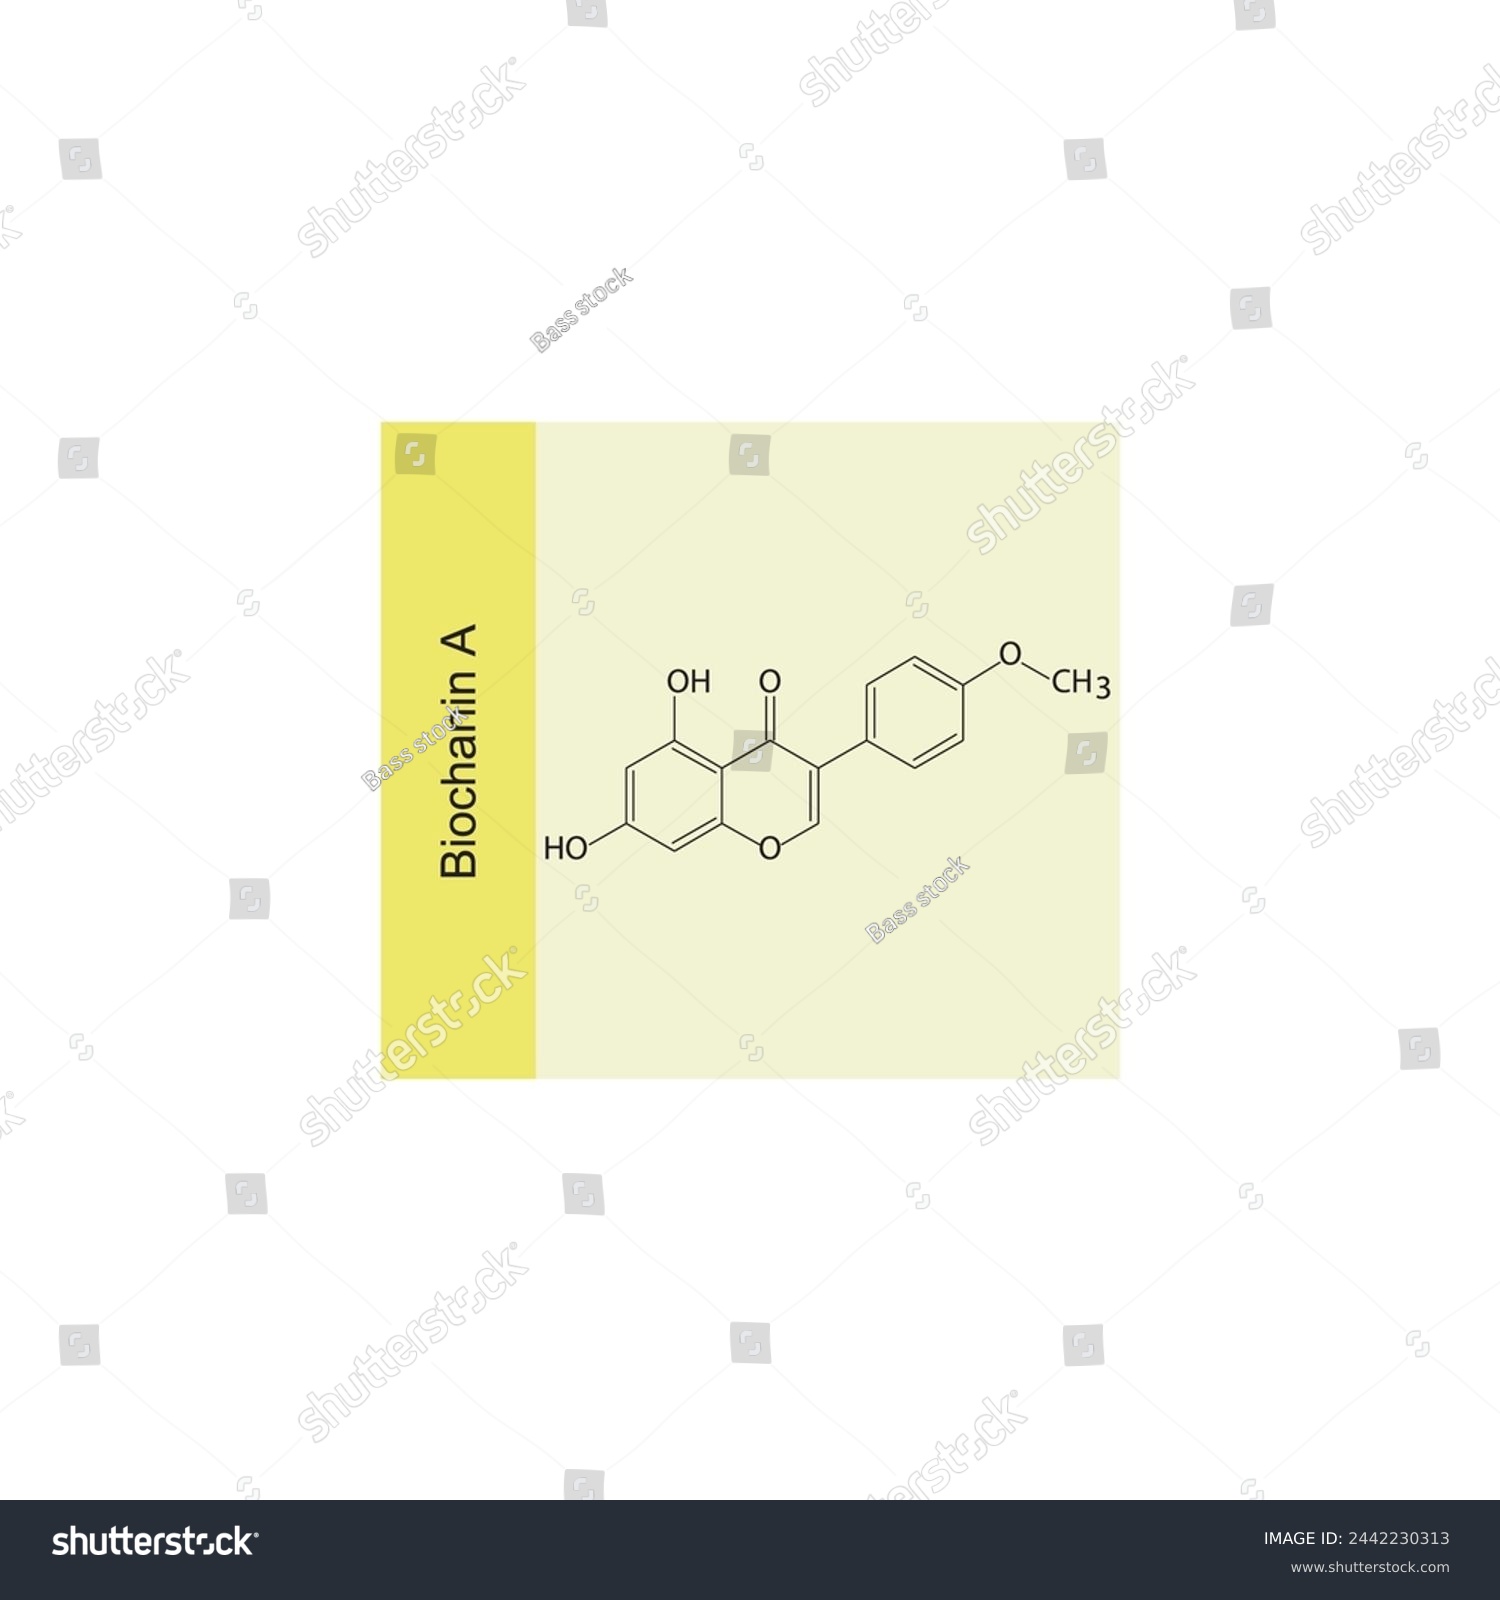 SVG of Biochanin A skeletal structure diagram.Isoflavanone compound molecule scientific illustration on yellow background. svg